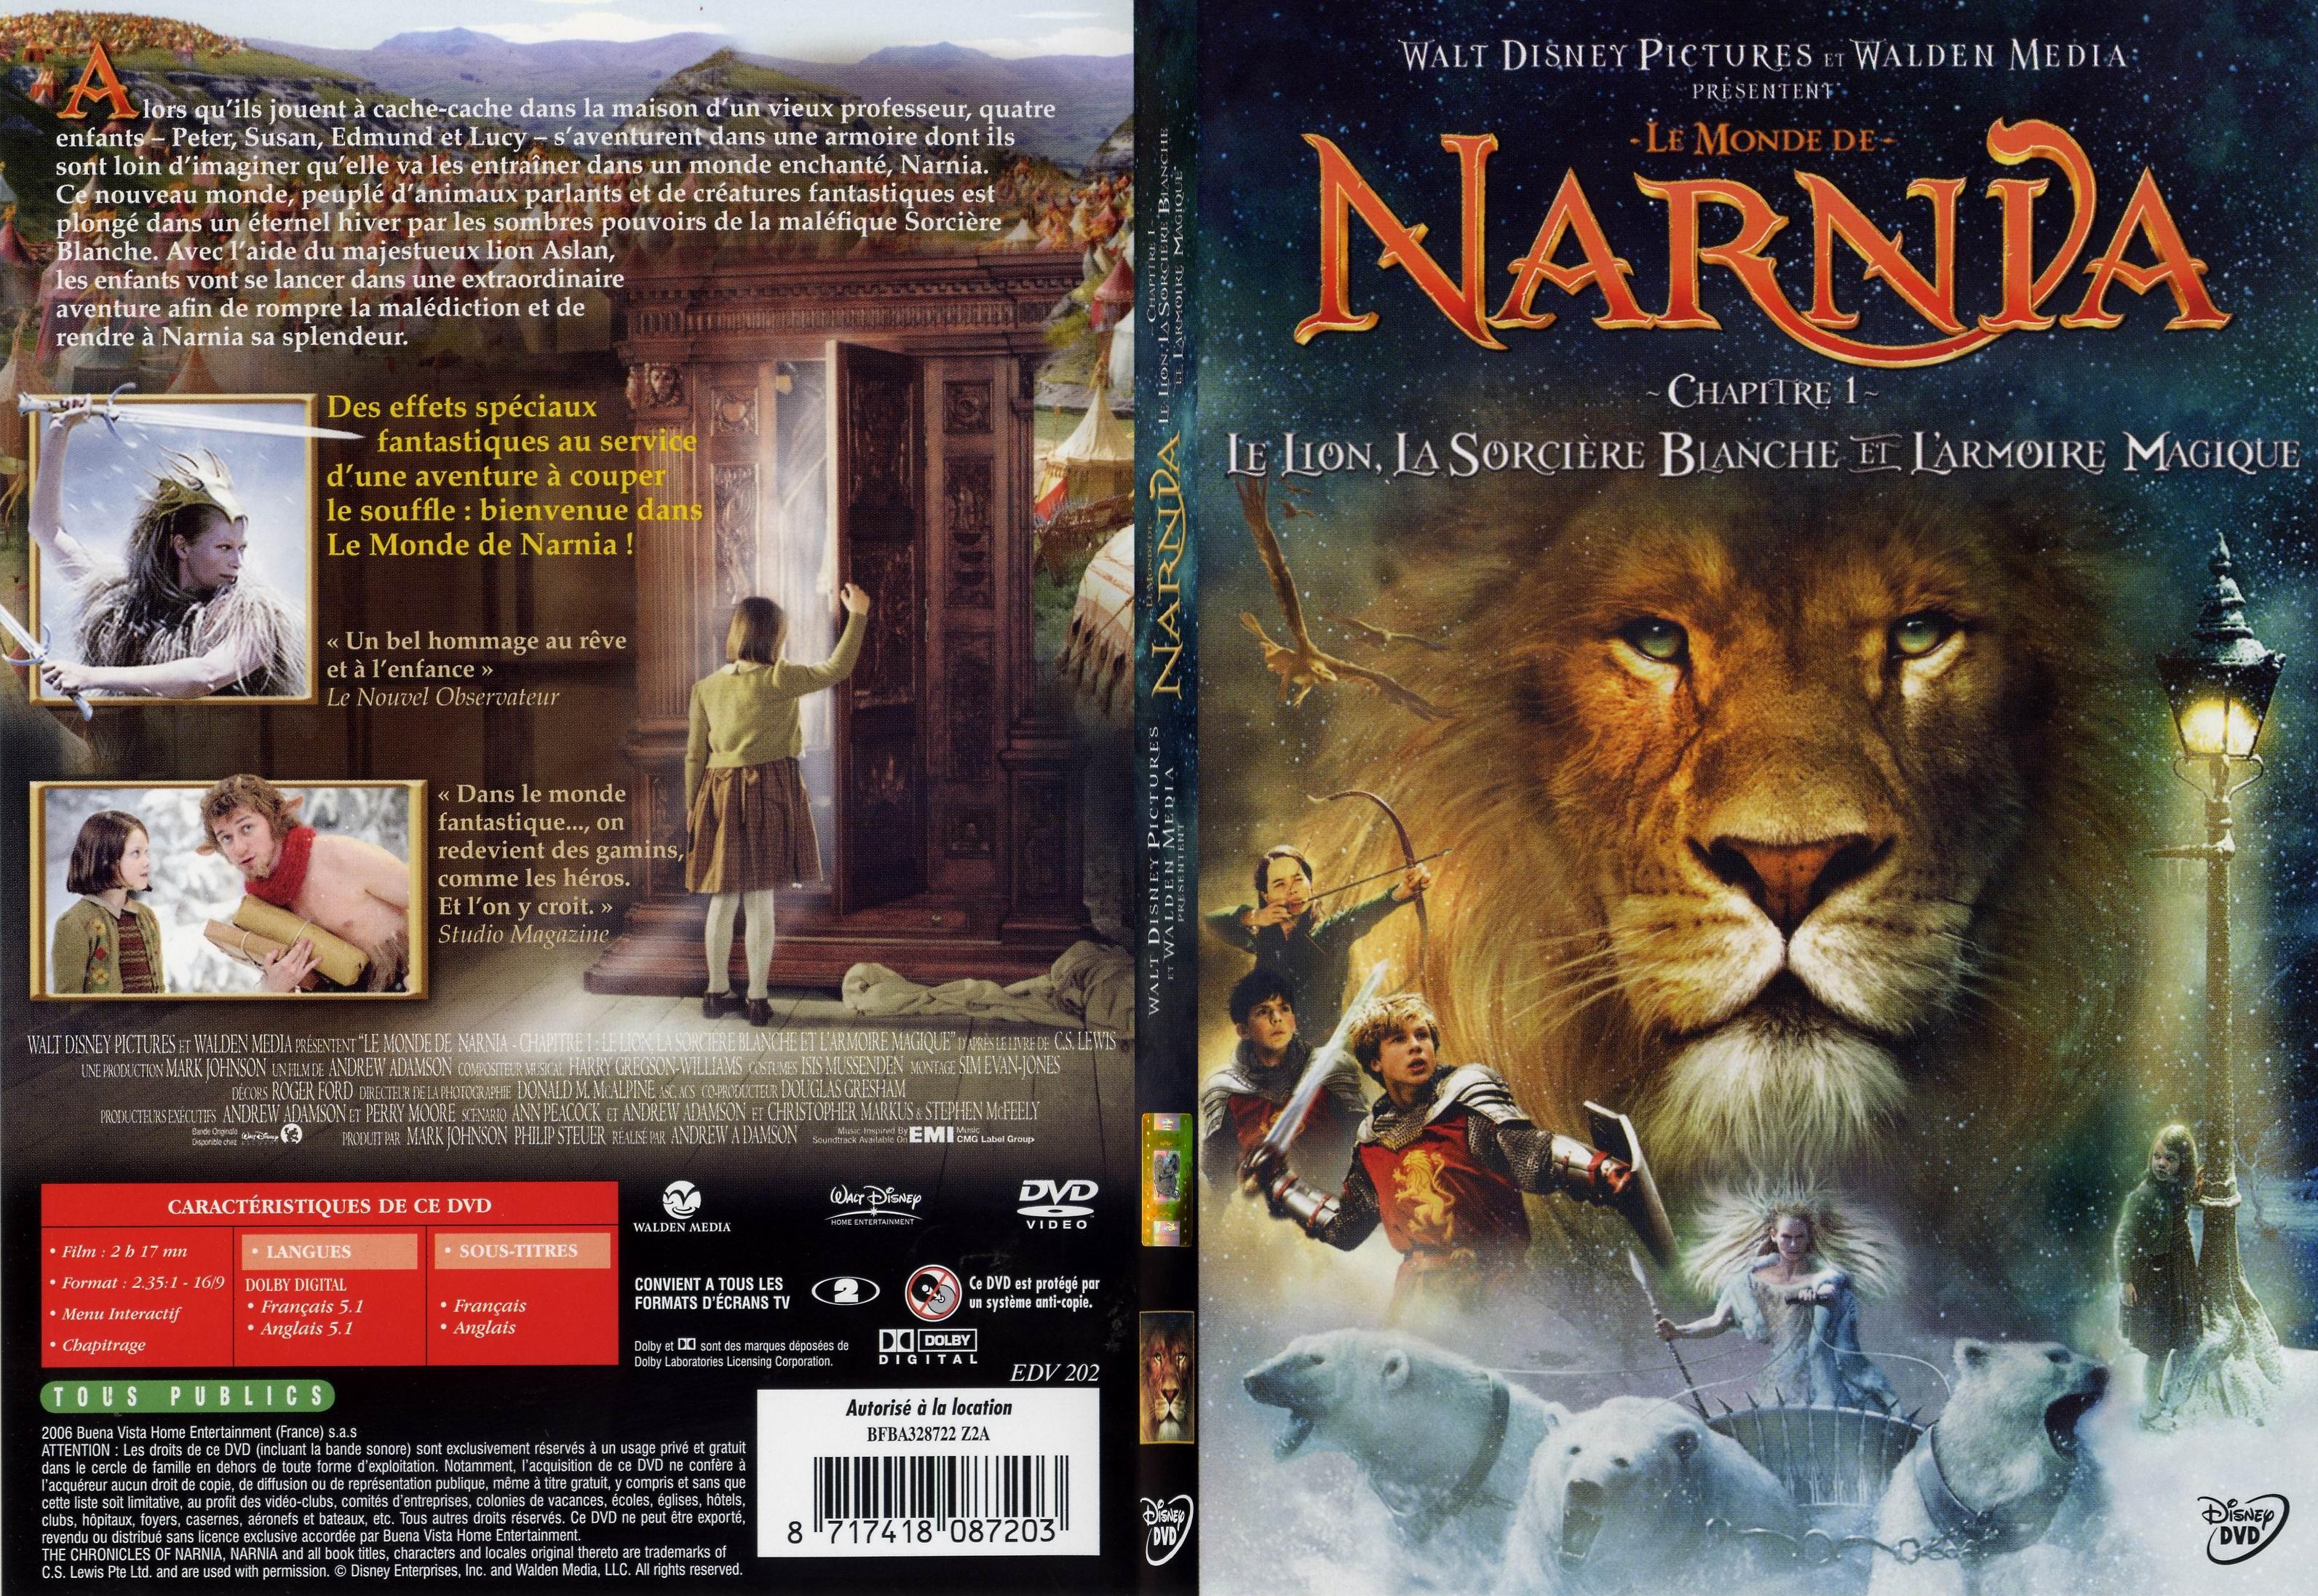 Jaquette DVD Le monde de narnia chapitre 1 - SLIM